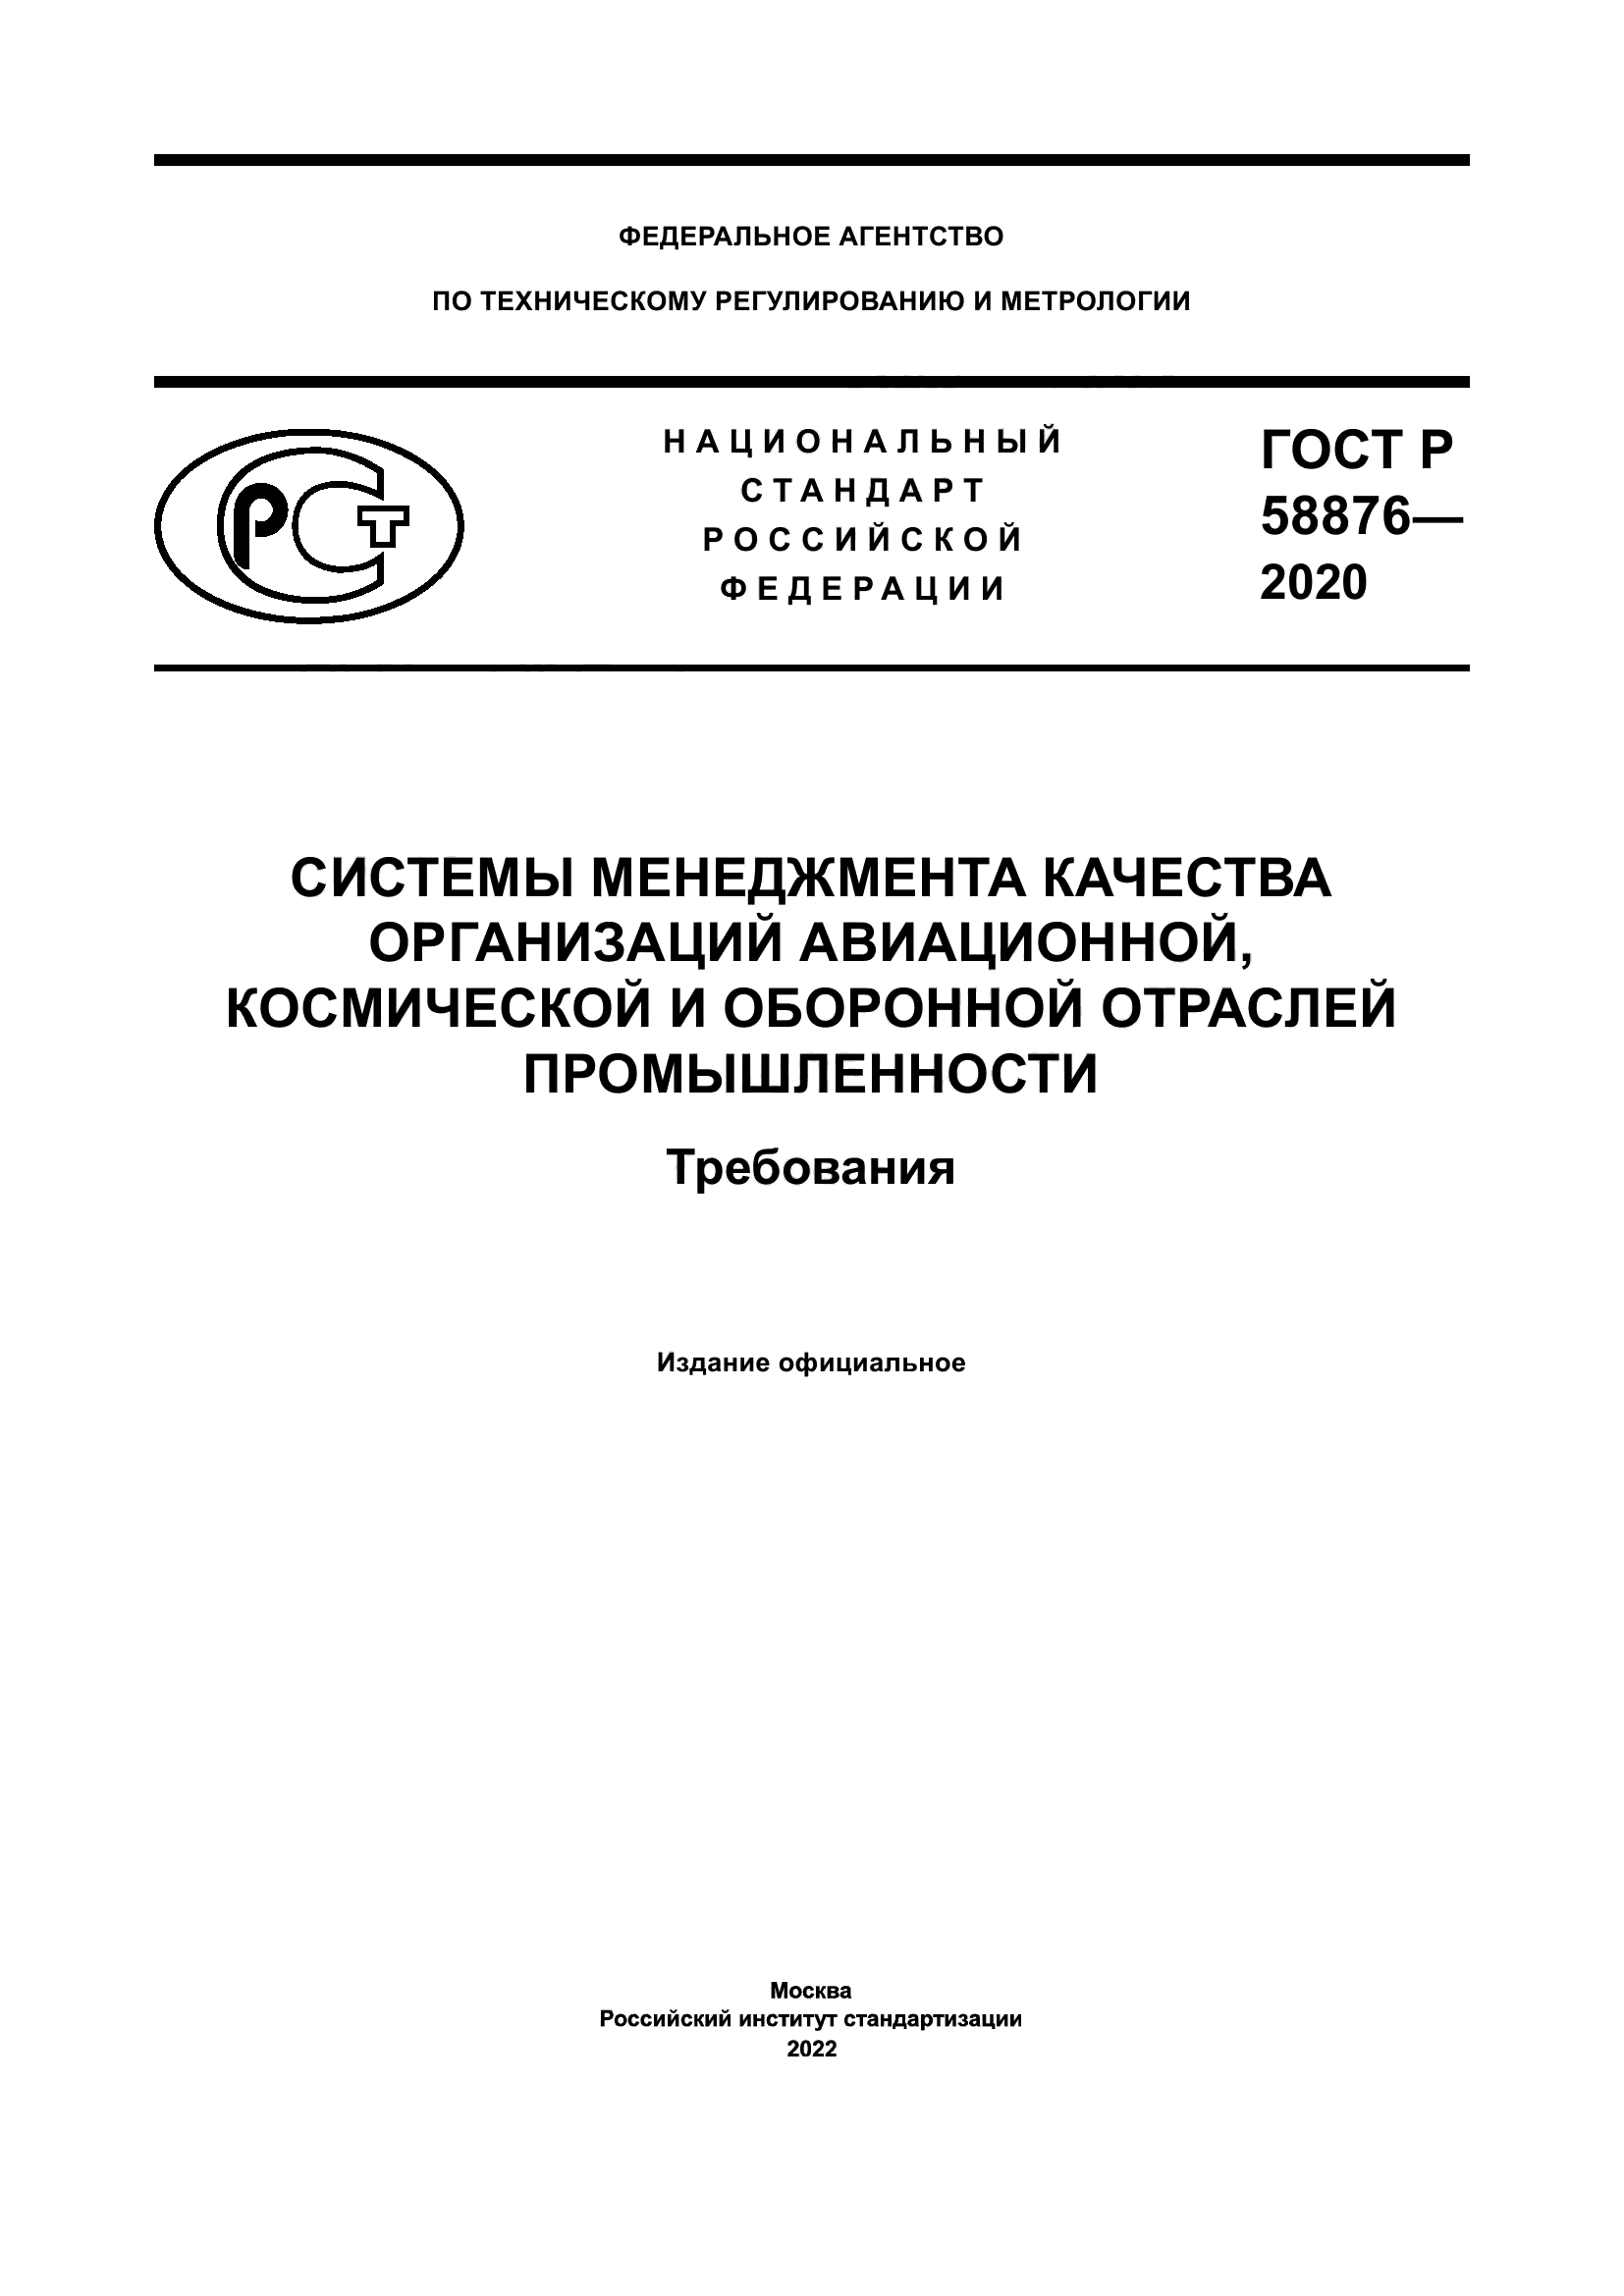 ГОСТ Р 58876-2020